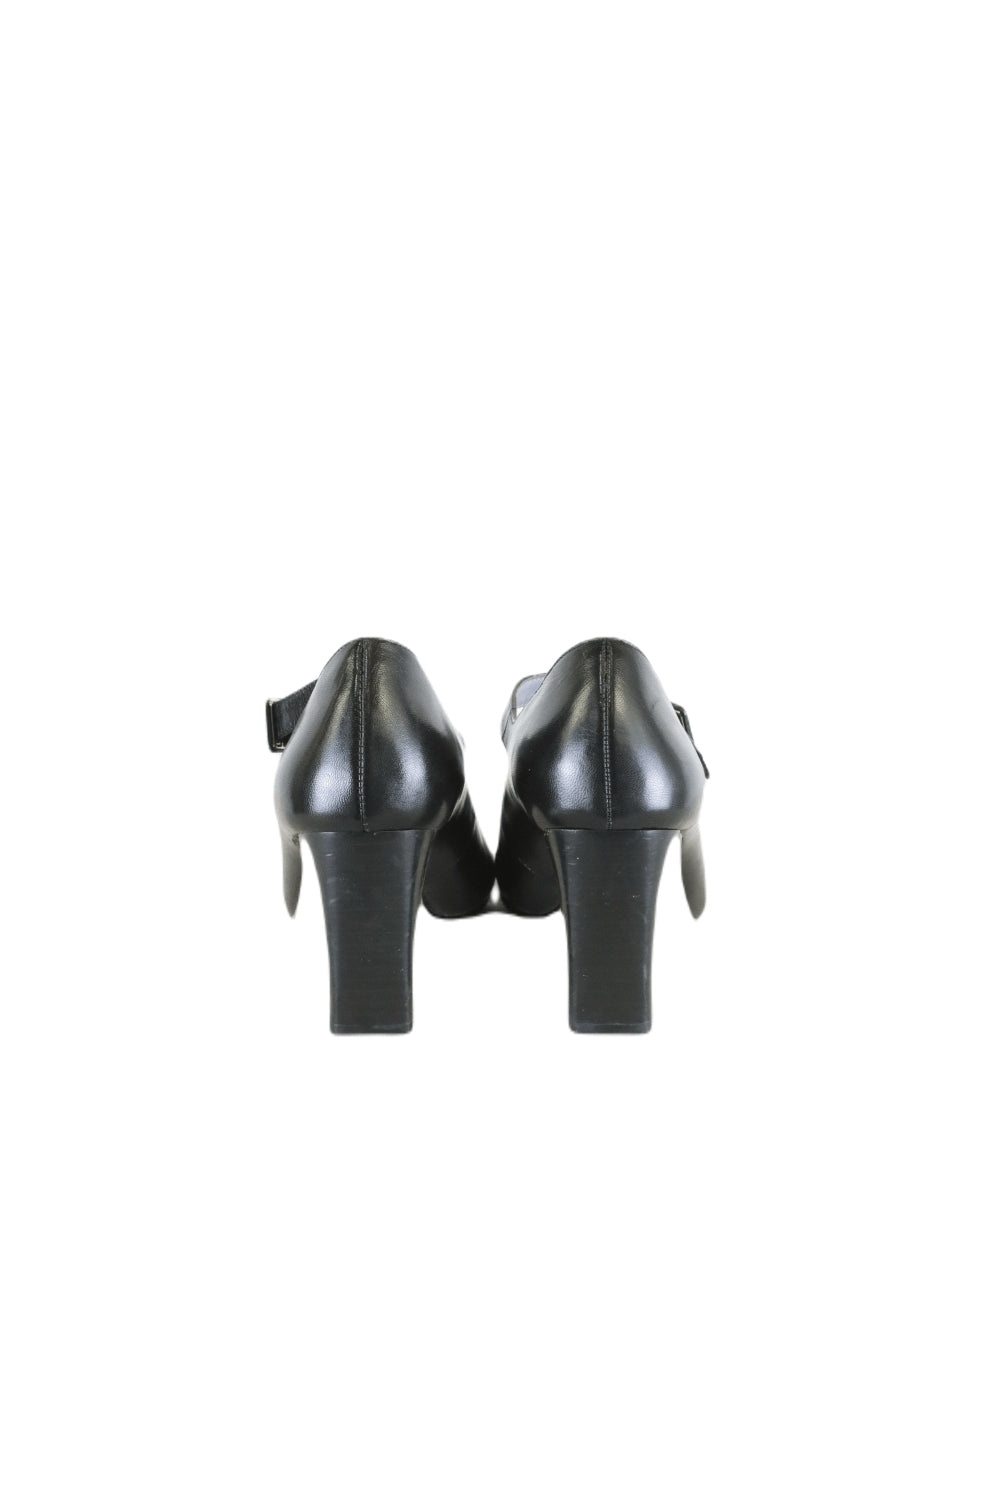 Giallo by Filippo Raphael Black Leather Heels 40